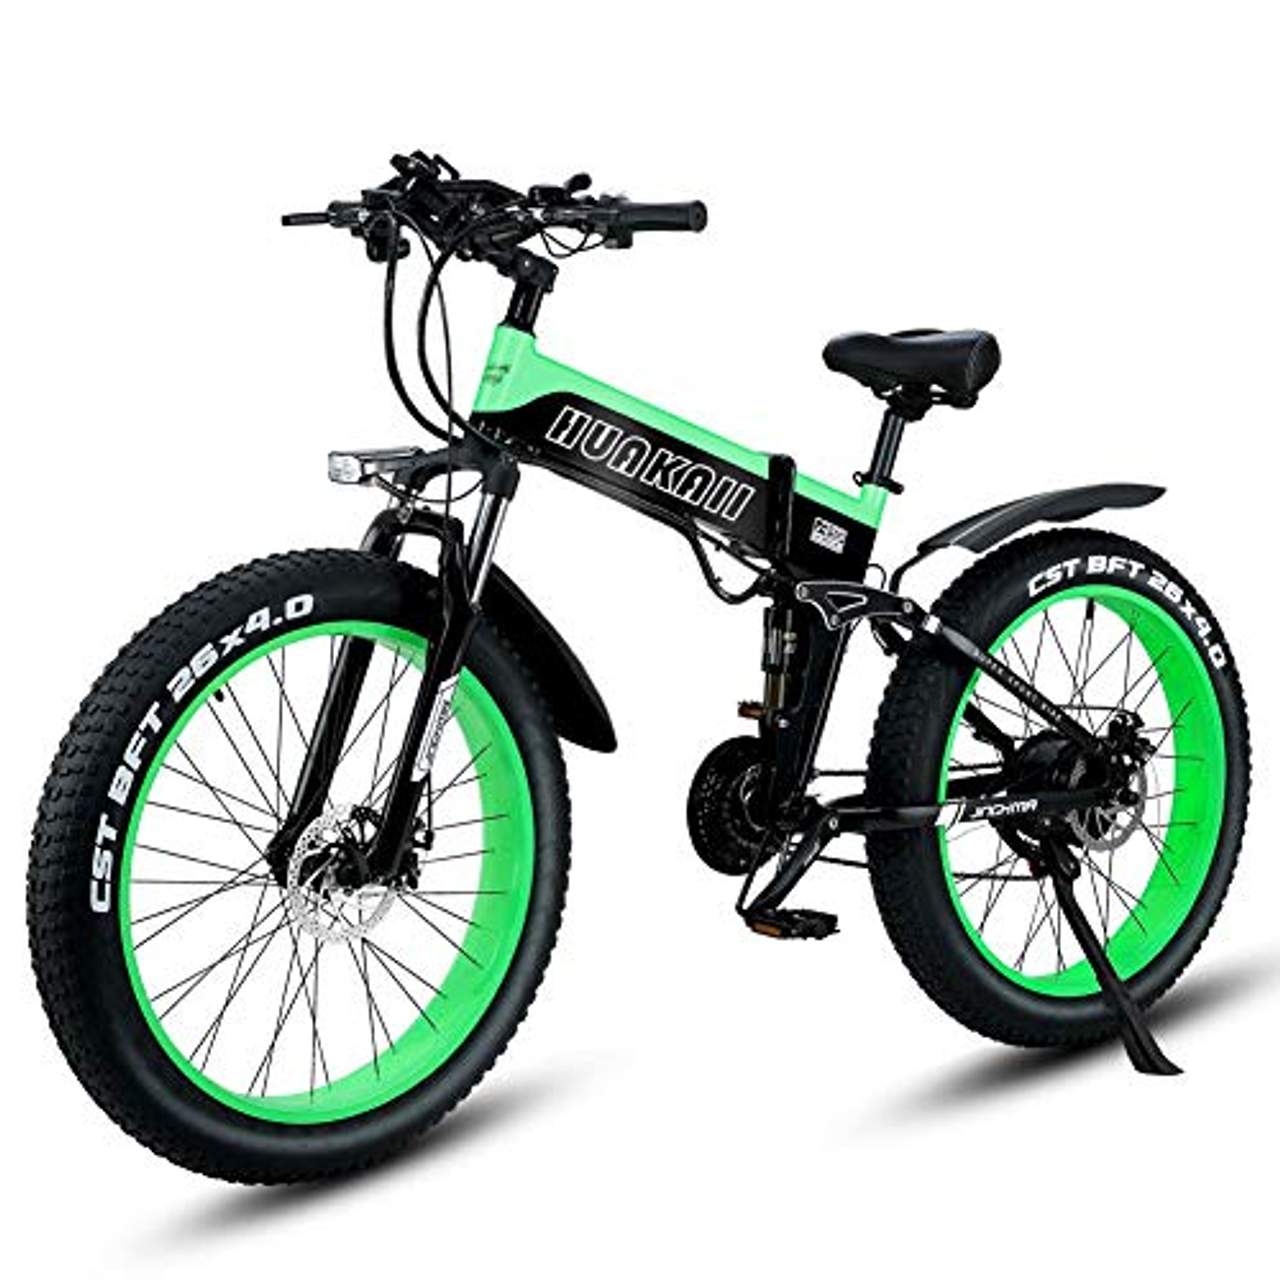 Unbekannt RICH BIT Elektrofahrräder aktualisiert RT860 36V 12.8A Lithium  Batterie Faltrad MTB Mountainbike E Bike